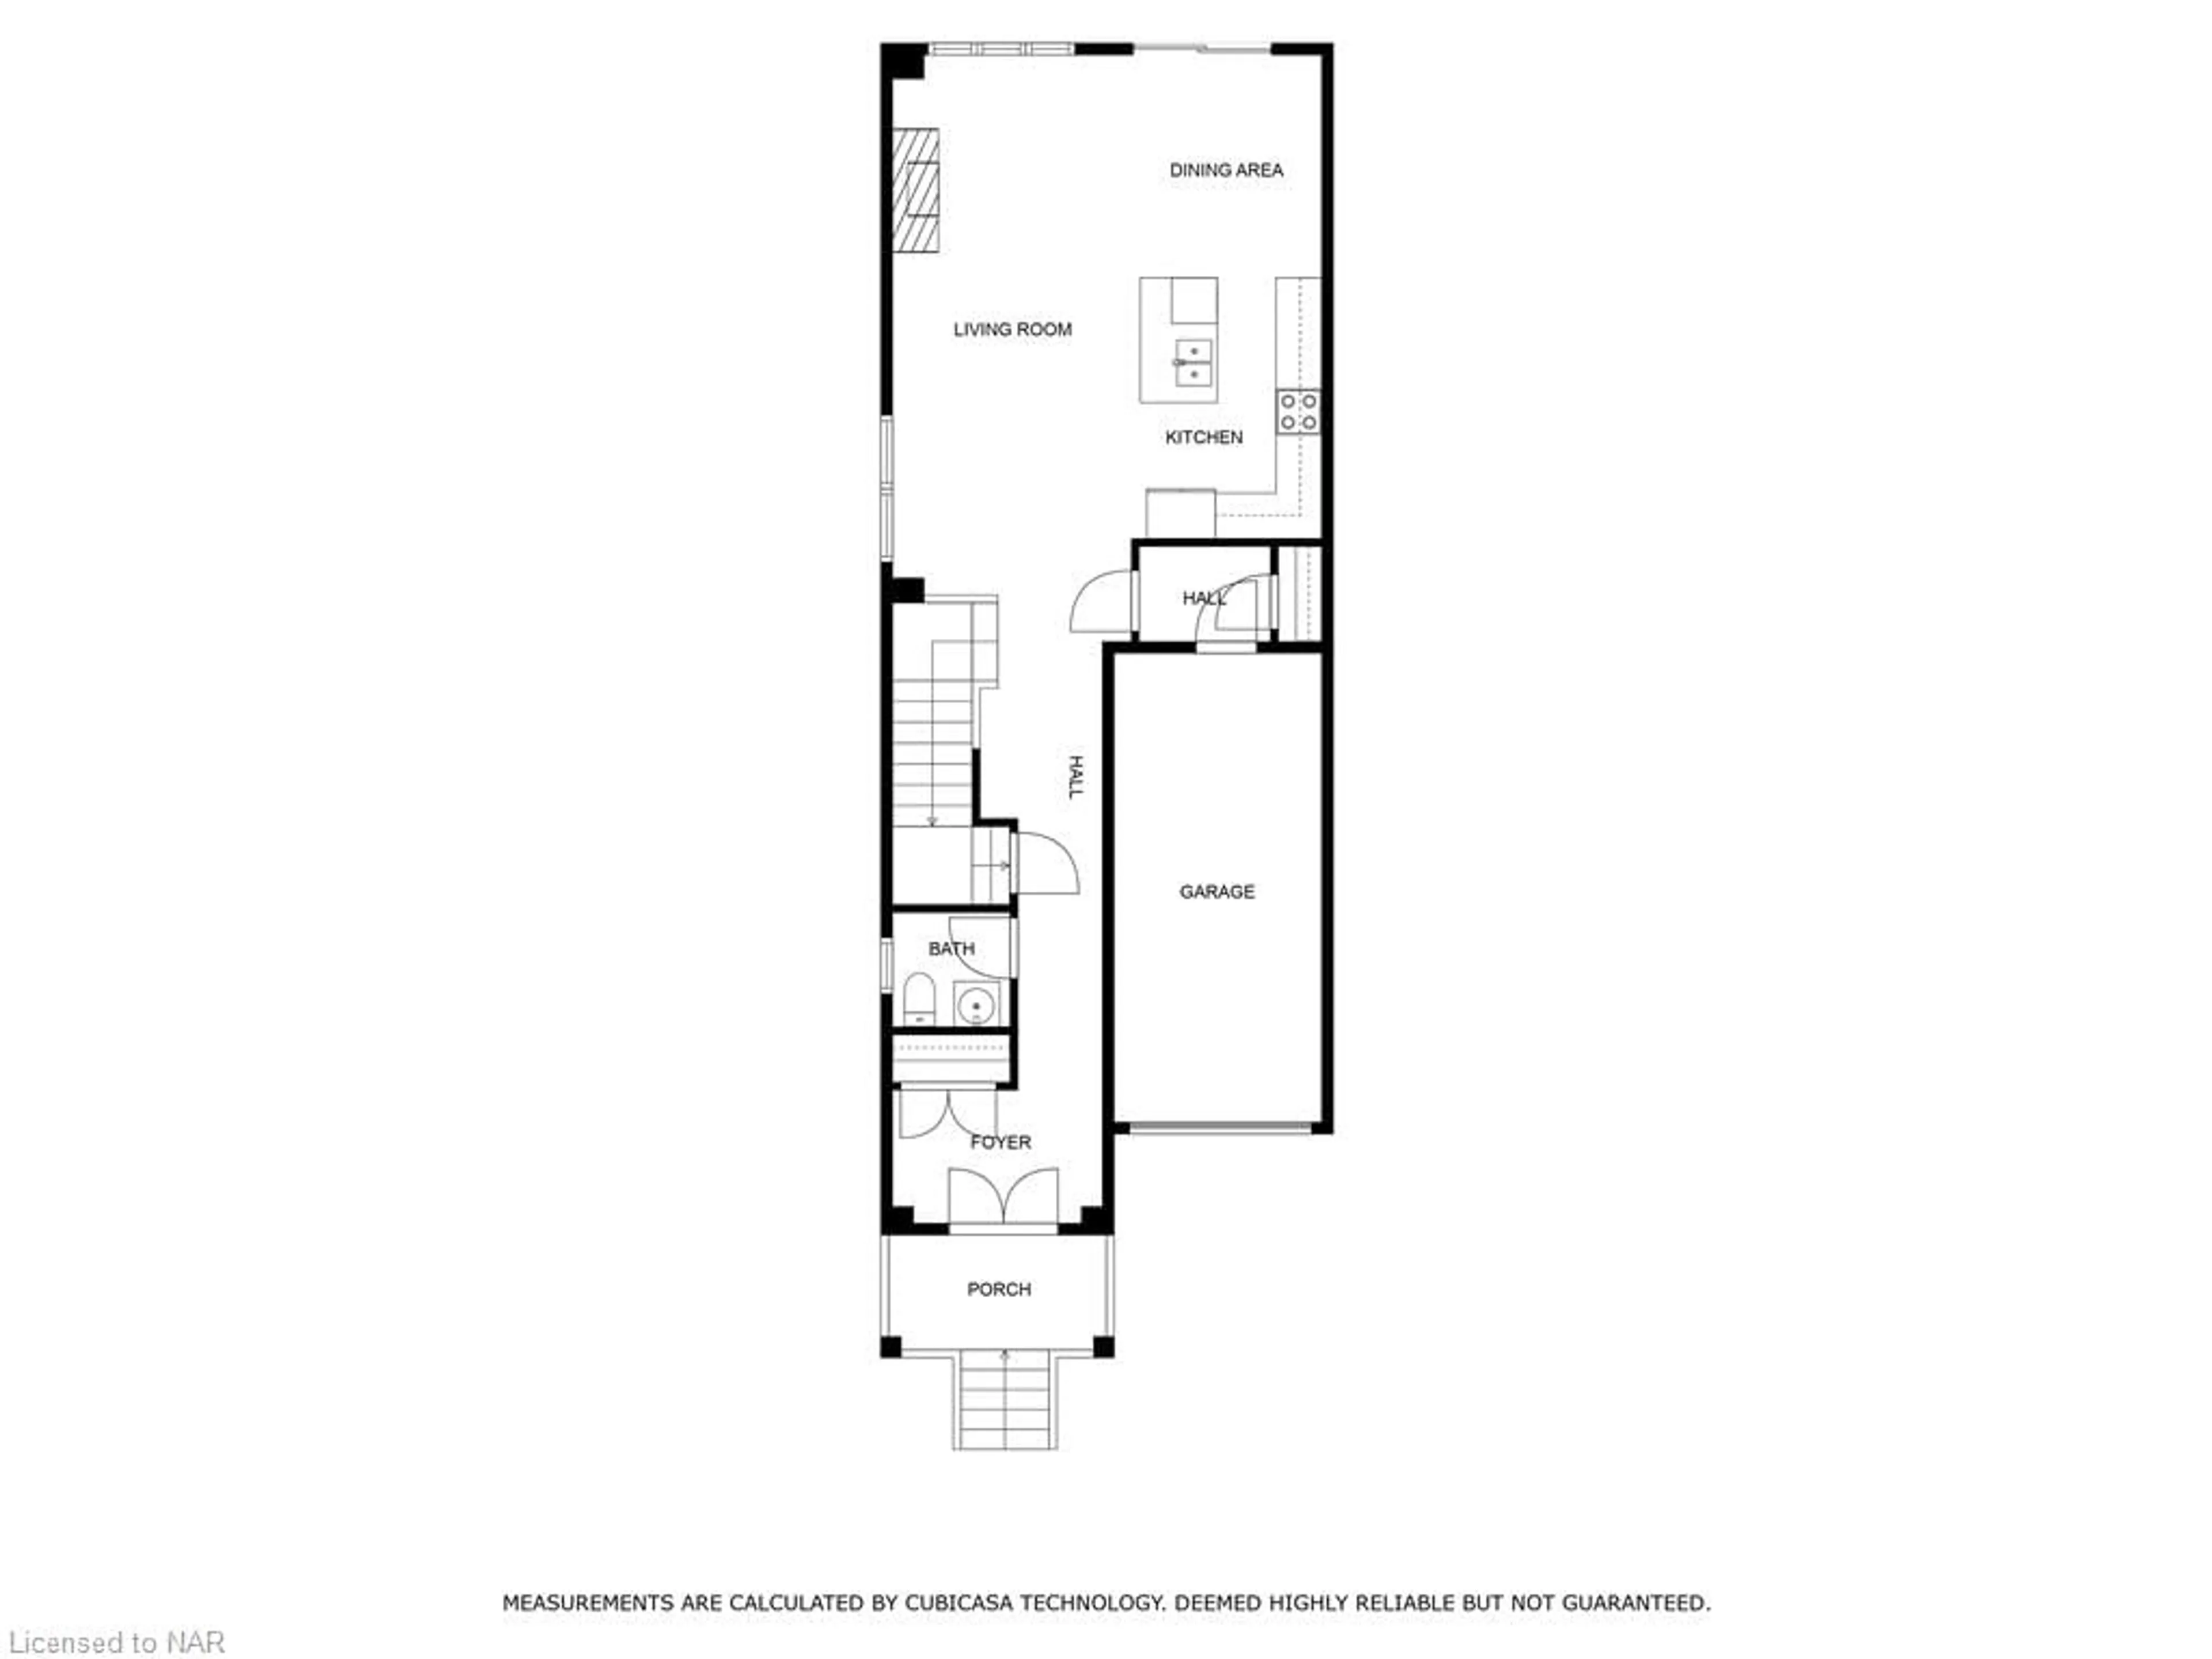 Floor plan for 8633 Sourgum Ave, Niagara Falls Ontario L2H 3S1